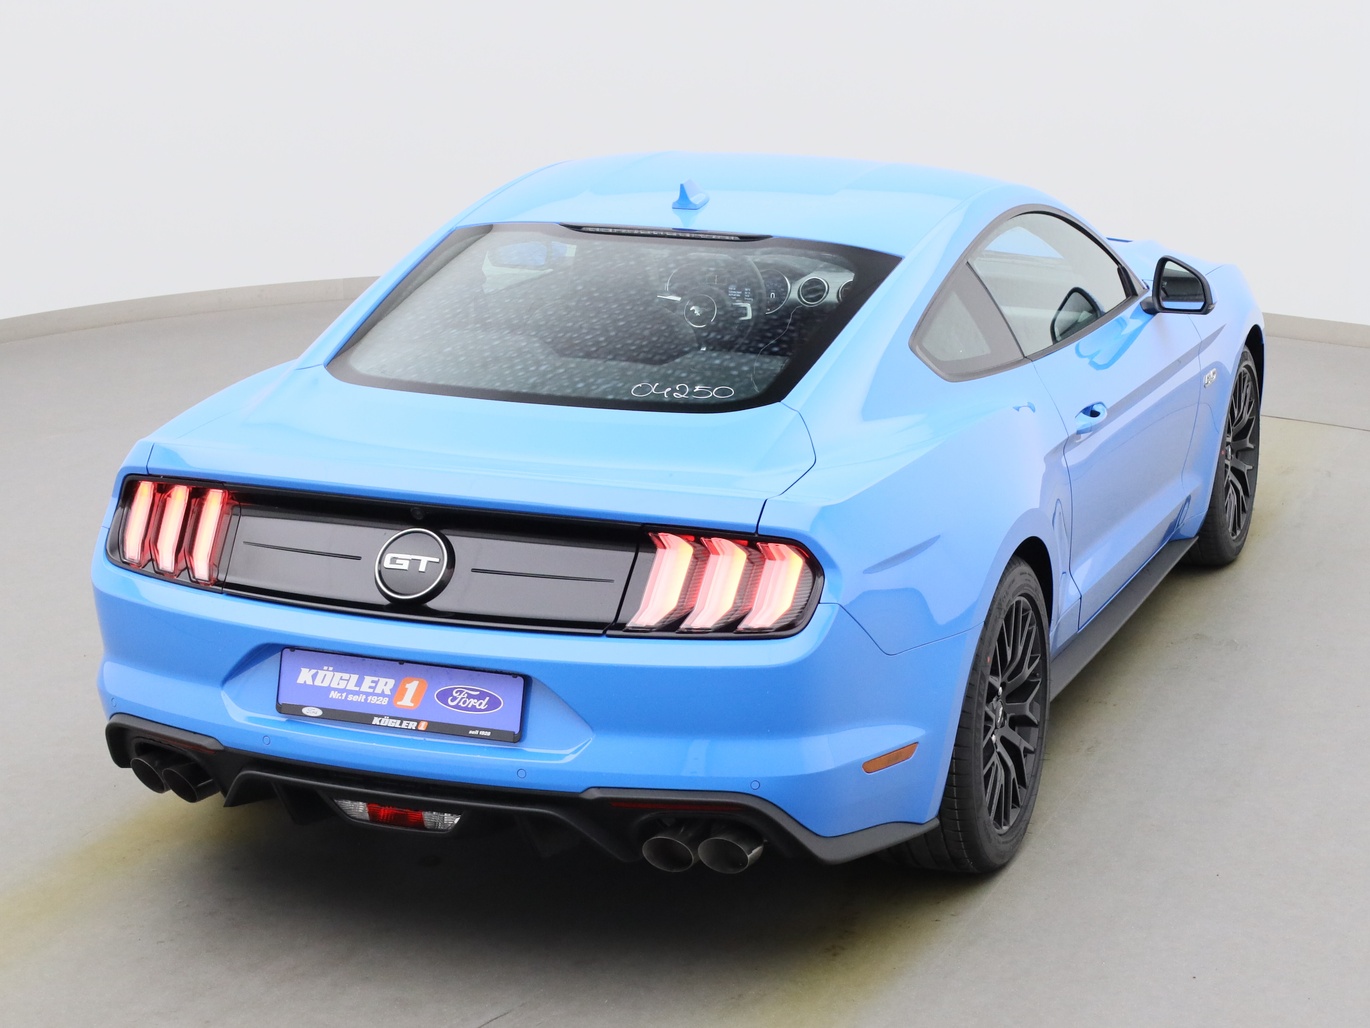  Ford Mustang GT Coupé V8 450PS / Premium 2 / Magne in Grabber Blue 